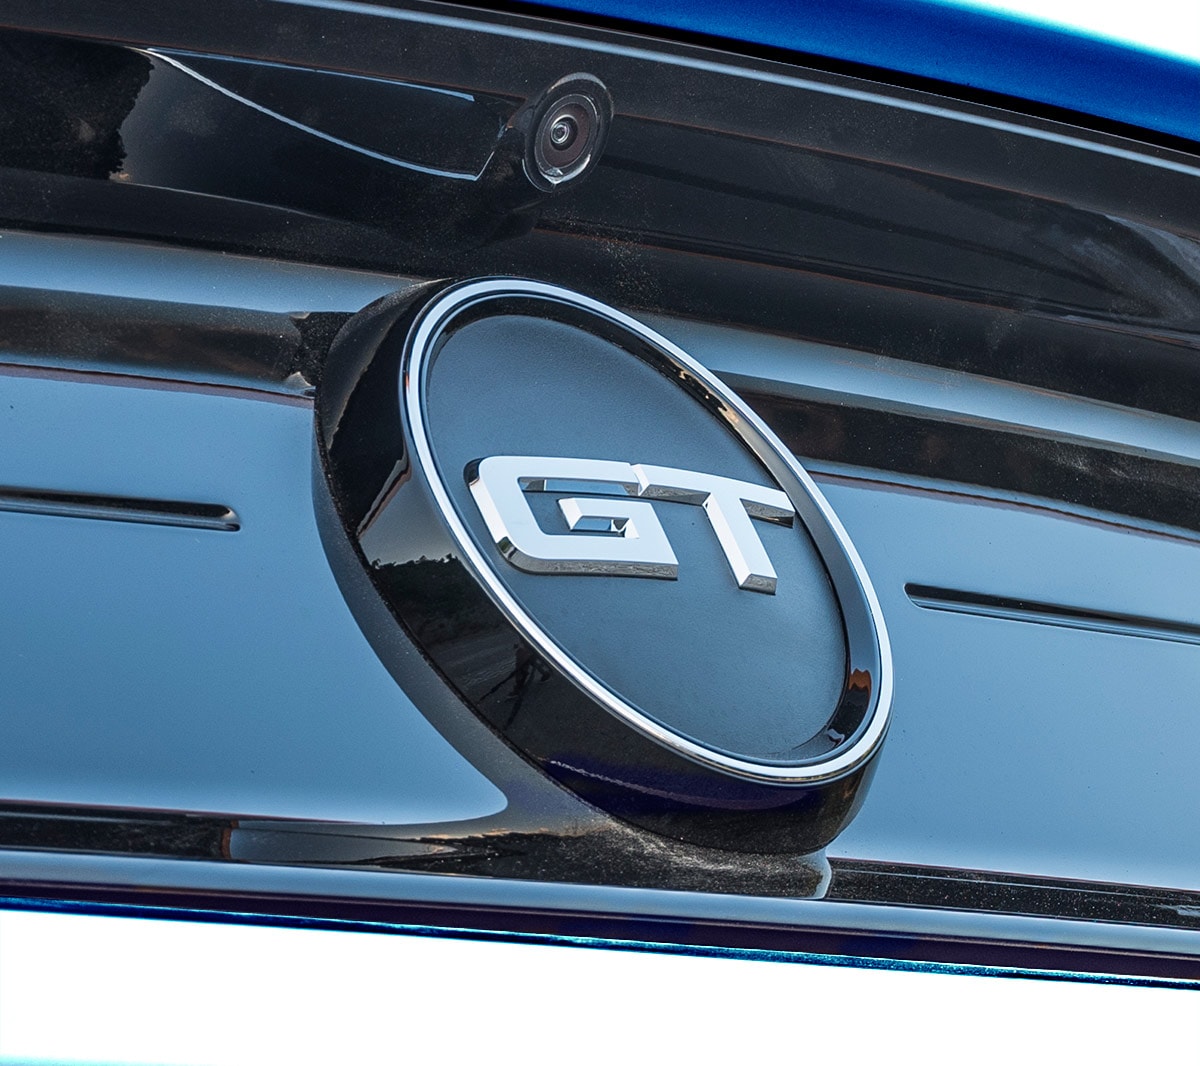 Ford Mustang GT. Detailansicht des GT Signets